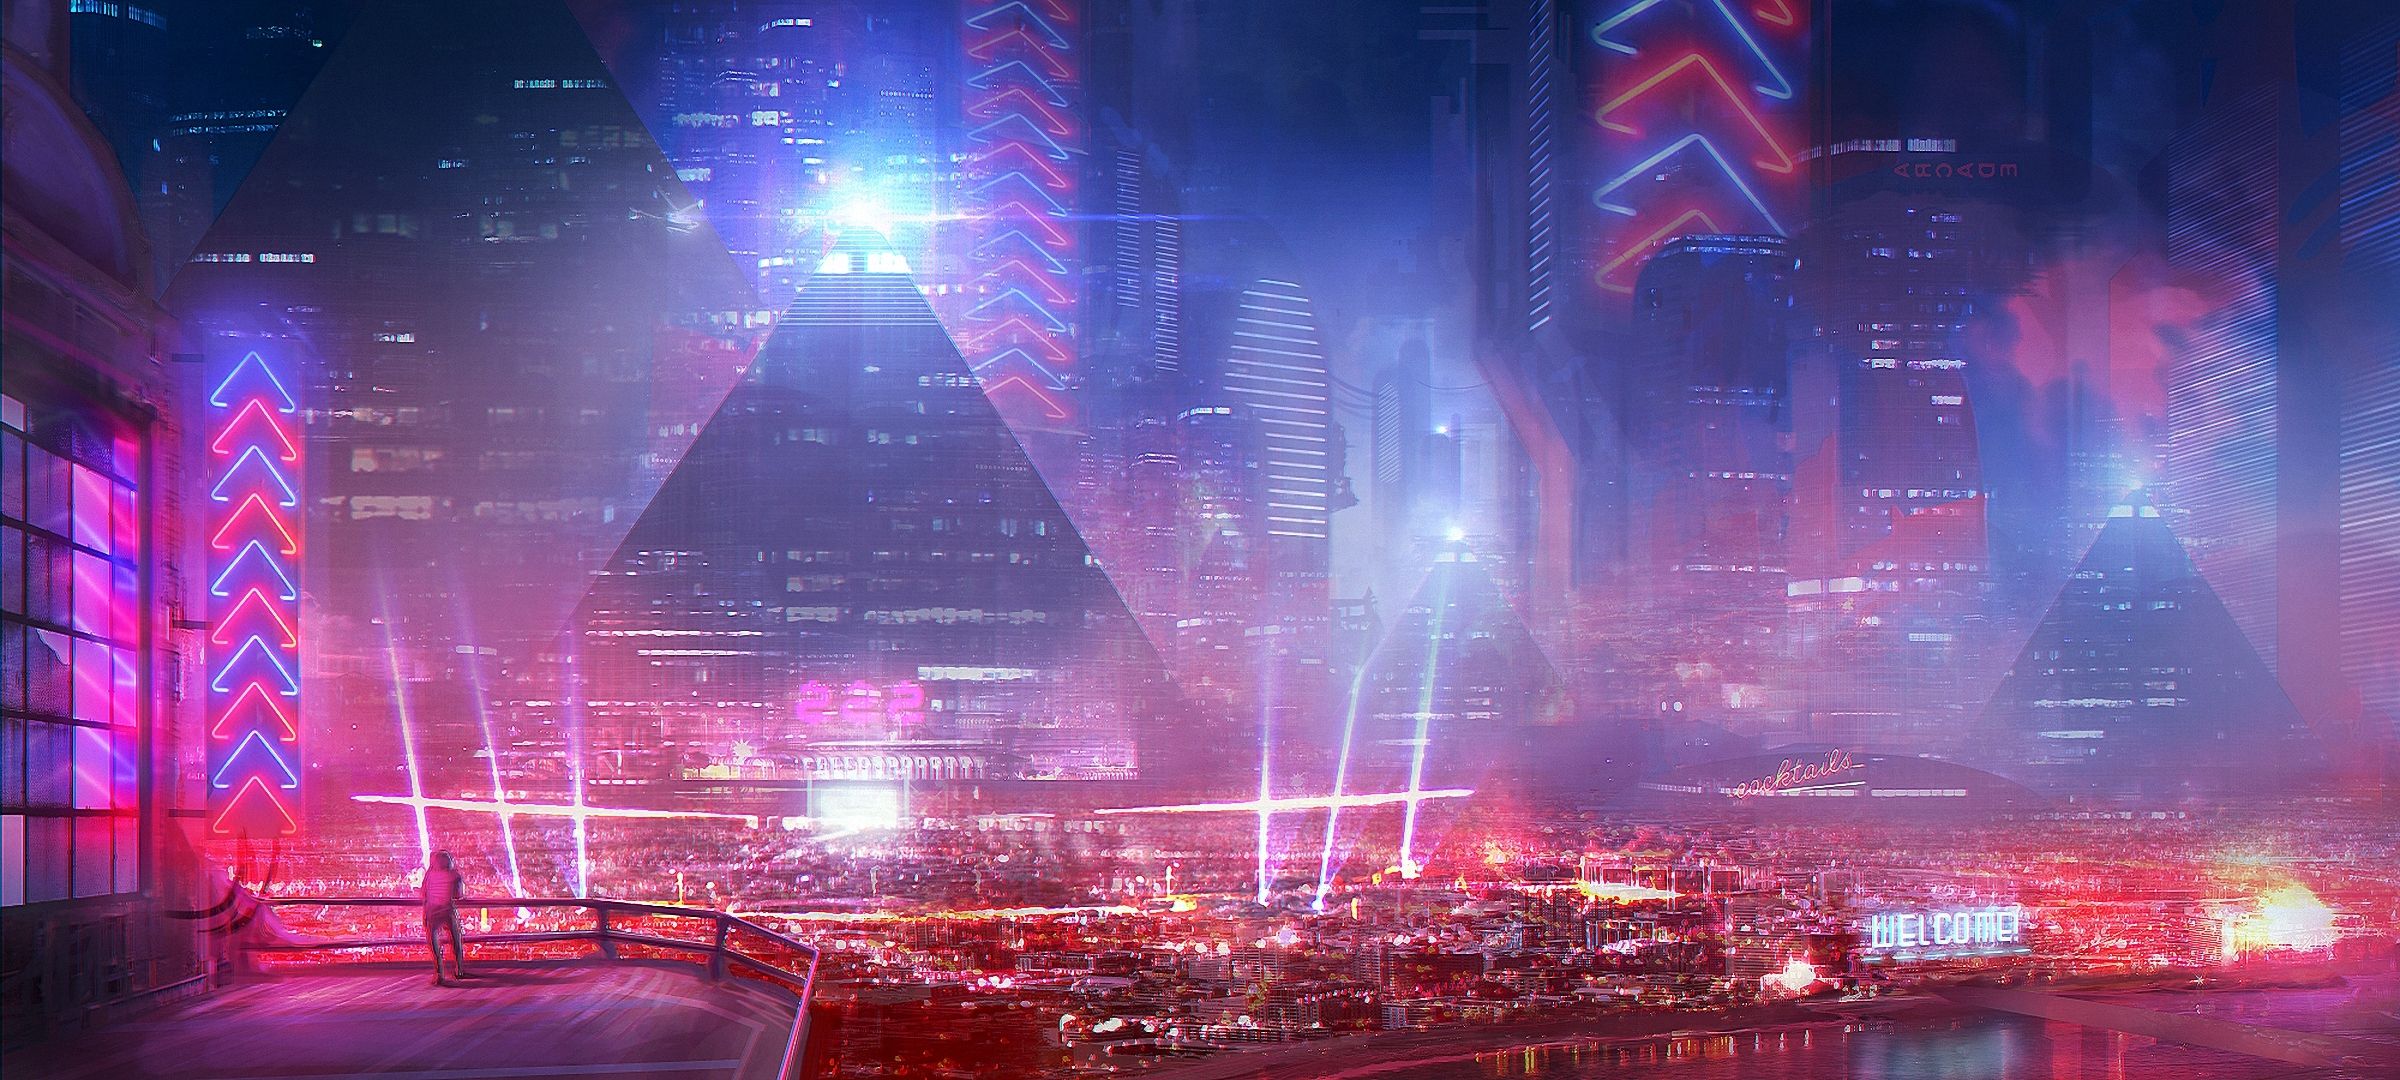 Cyberpunk City - 2400x1080 Wallpaper 